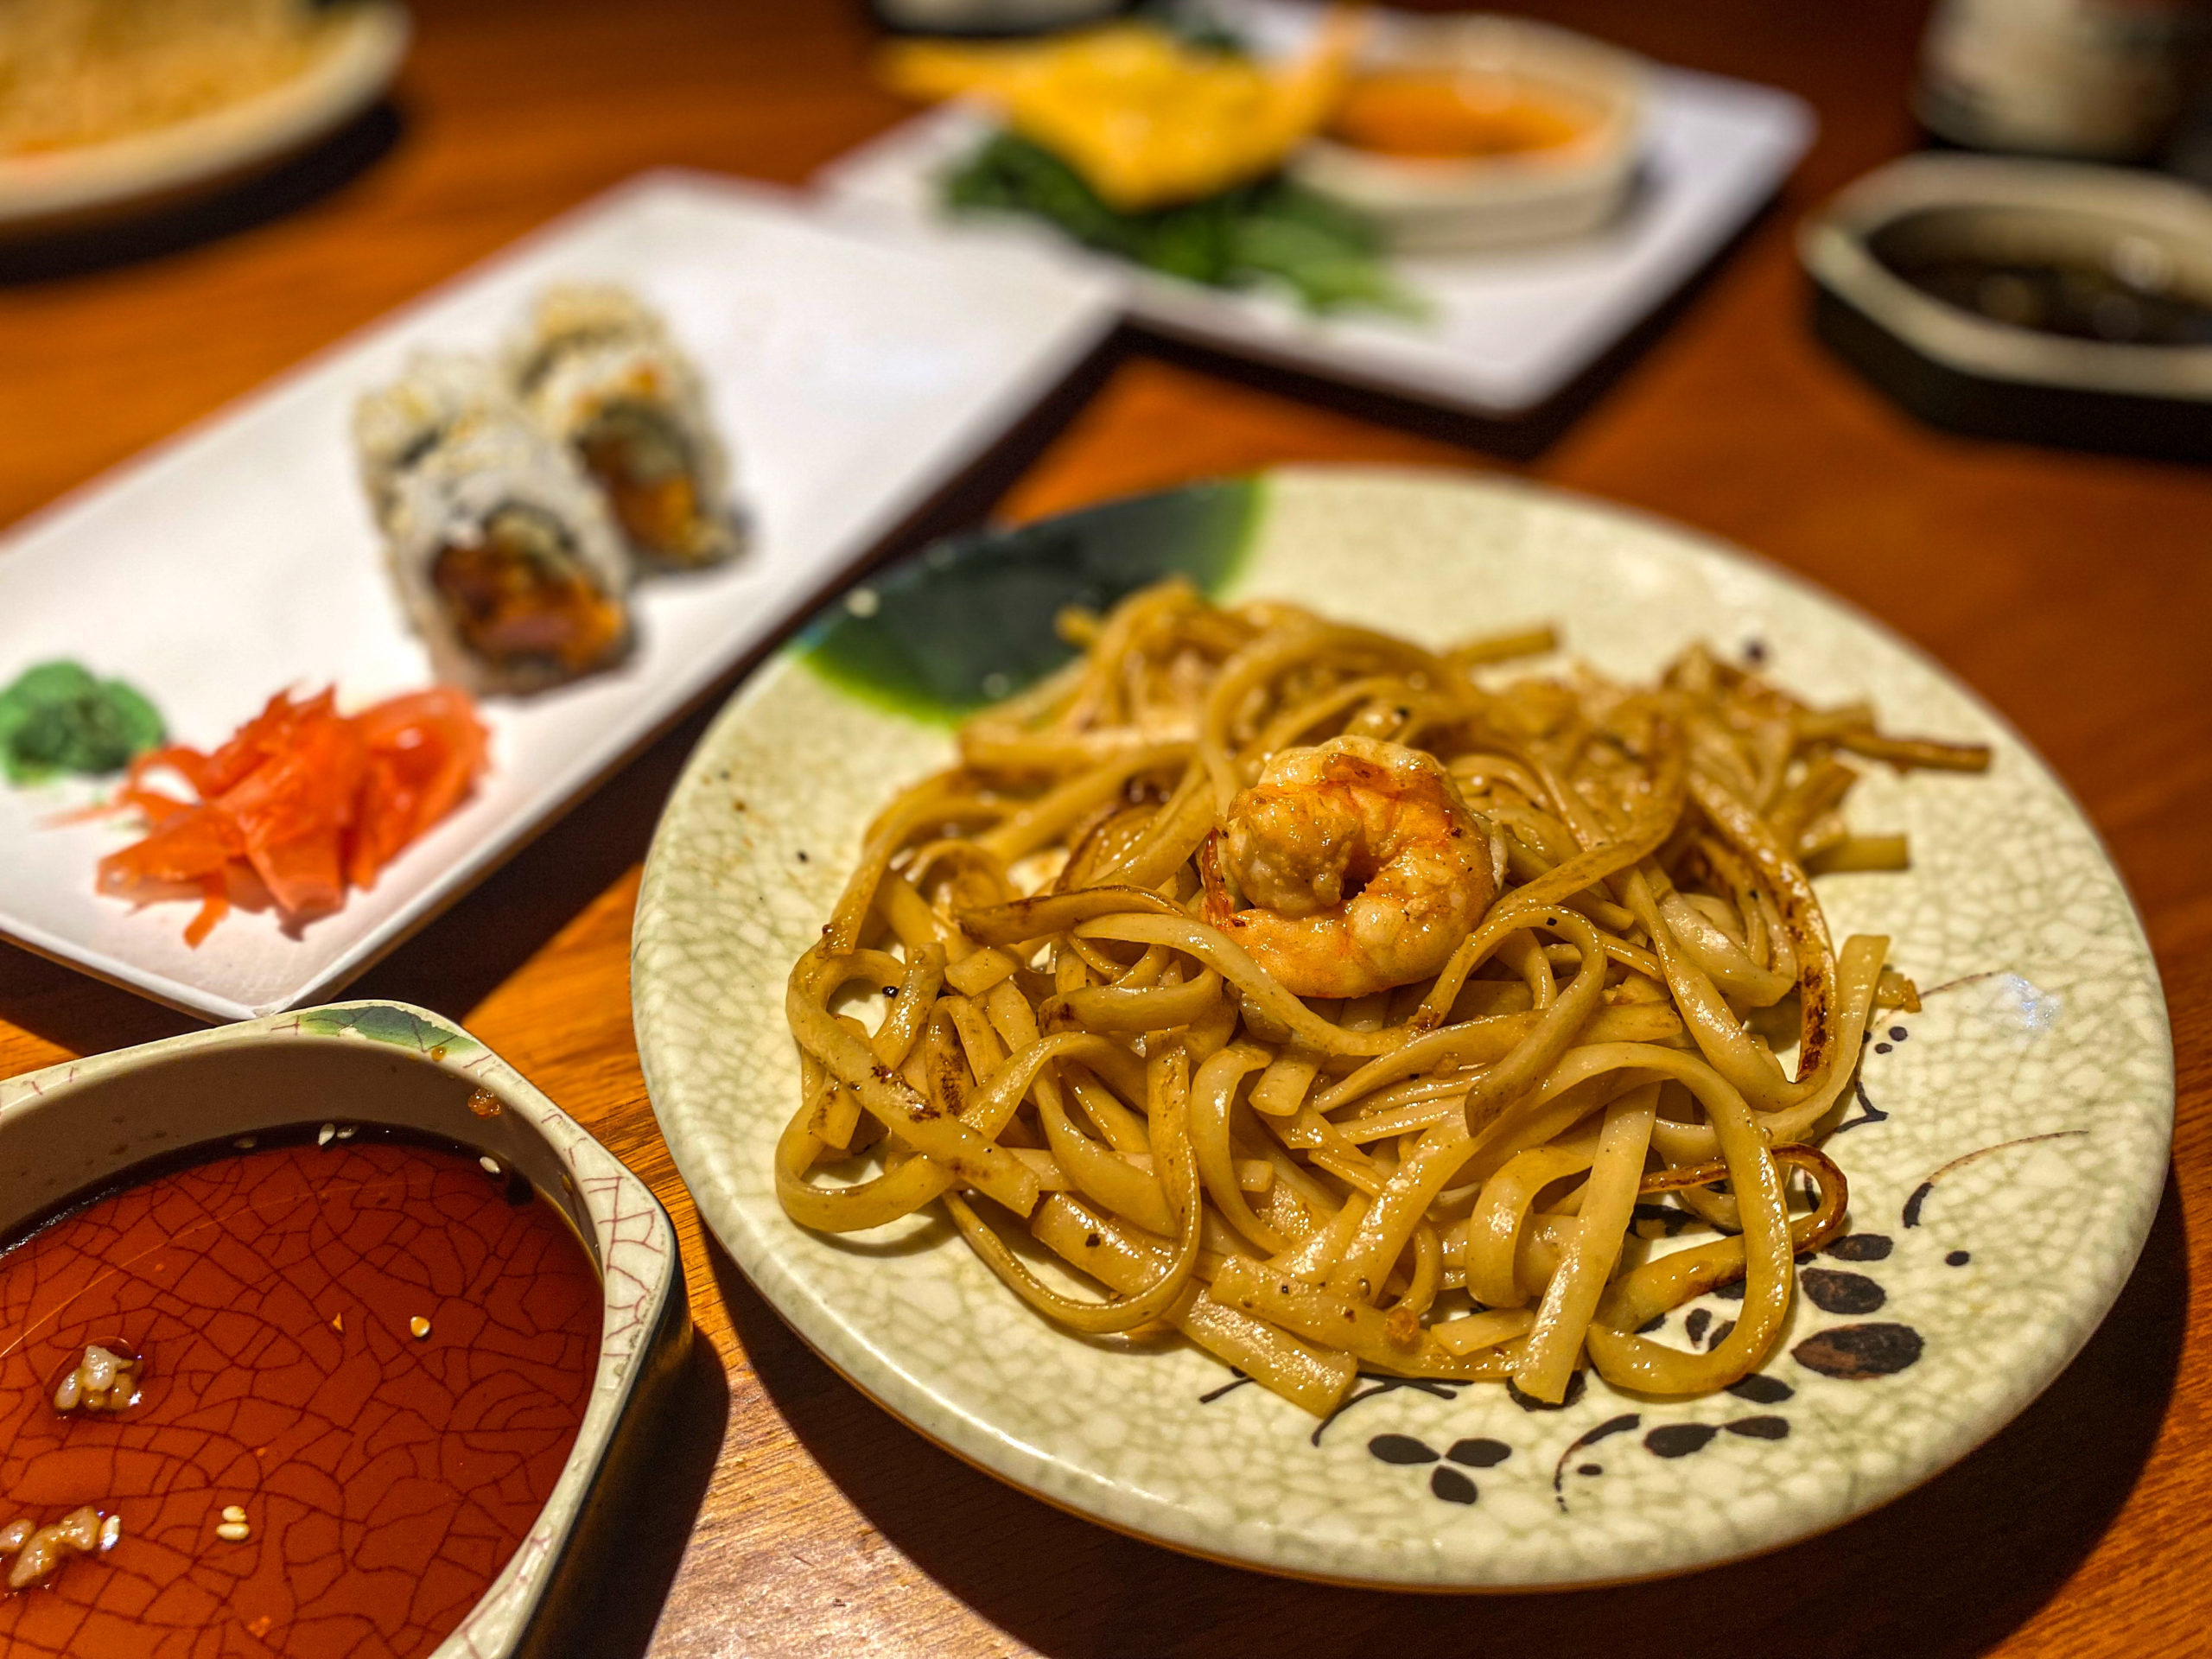 Noodles and shrimp - part of the teppanyaki entree